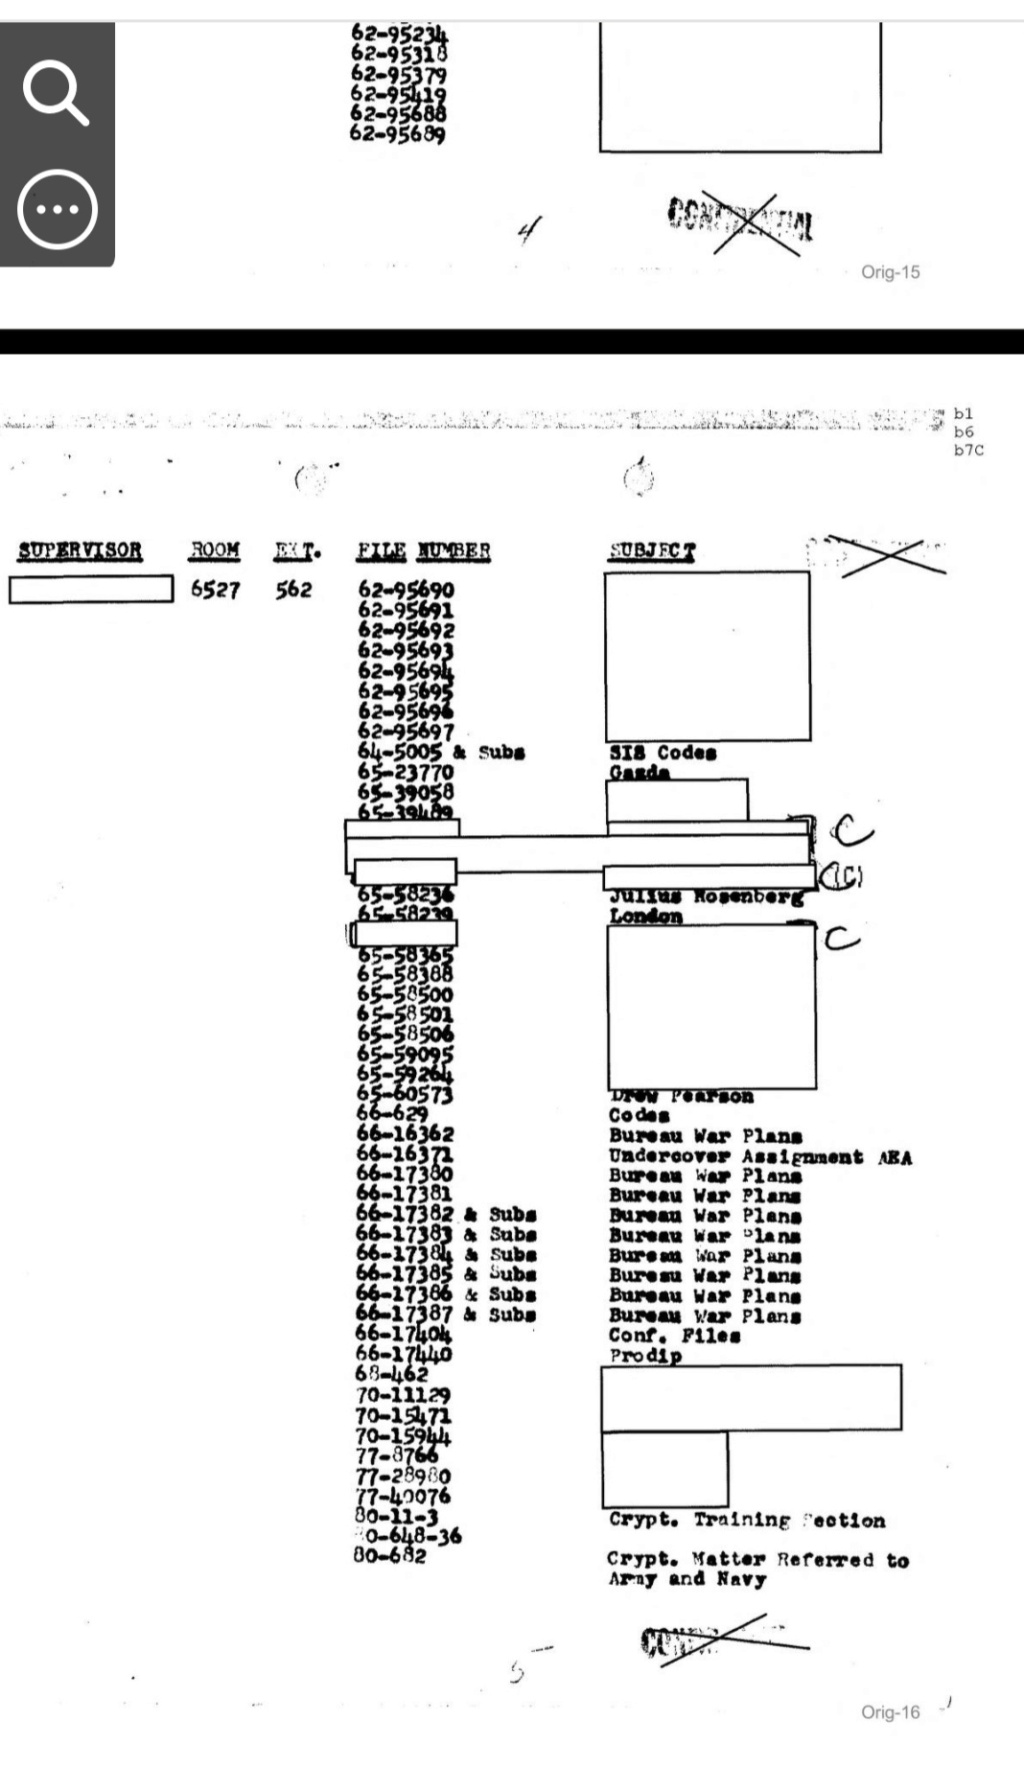 oswald - Lee Harvey Oswald FBI 65 Espionage File by Malcolm Blunt Scree566